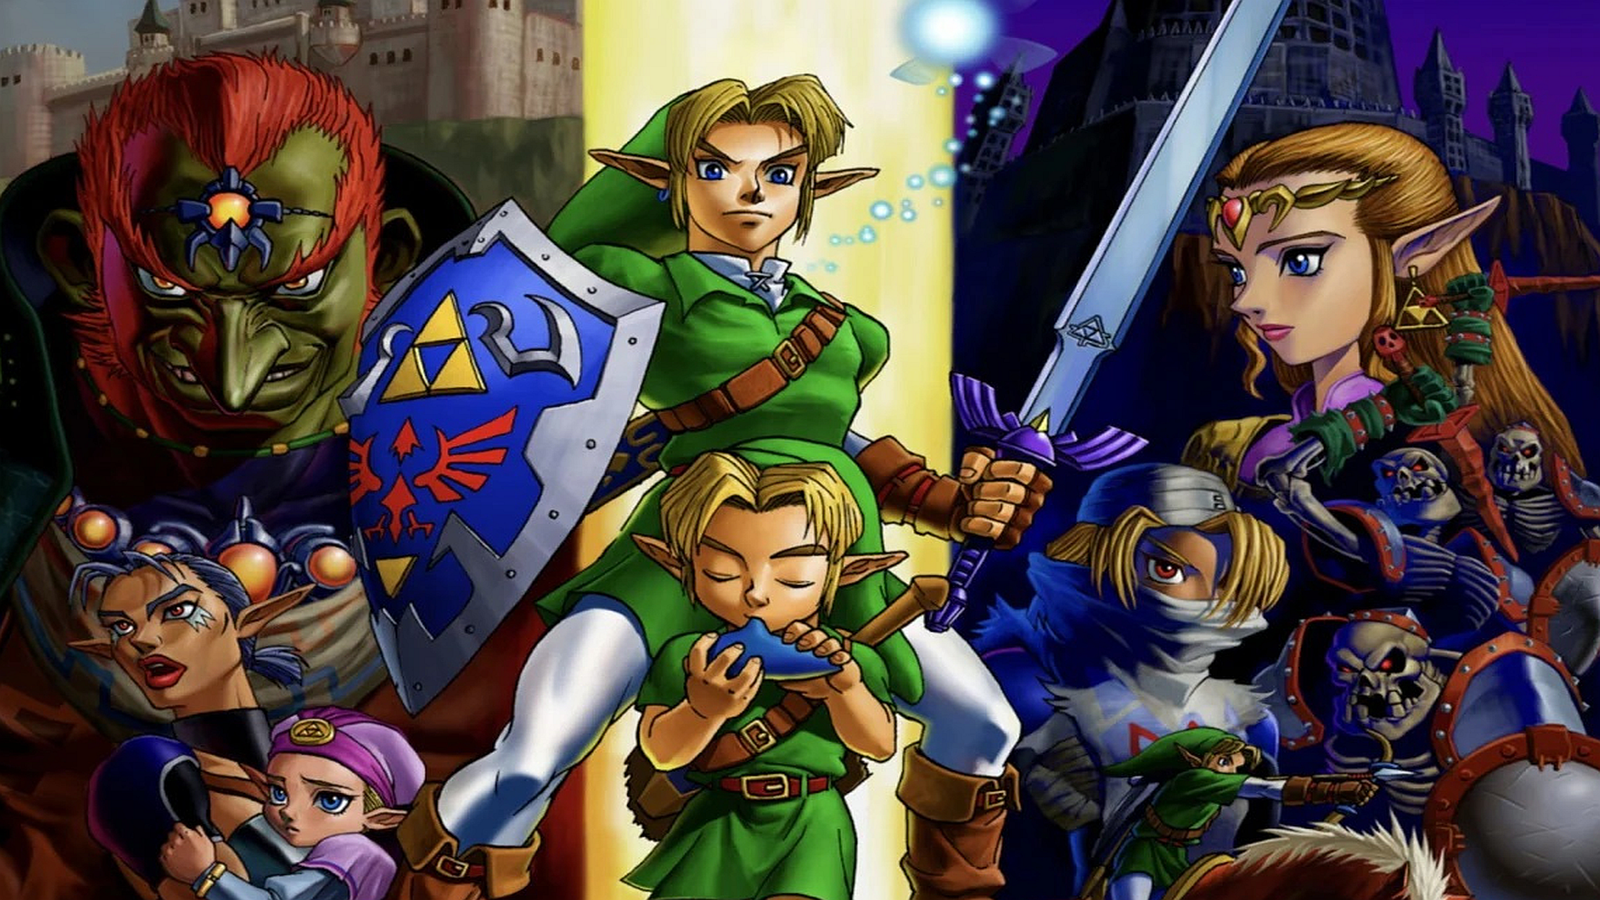 The Legend of Zelda: Ocarina of Time turns 25